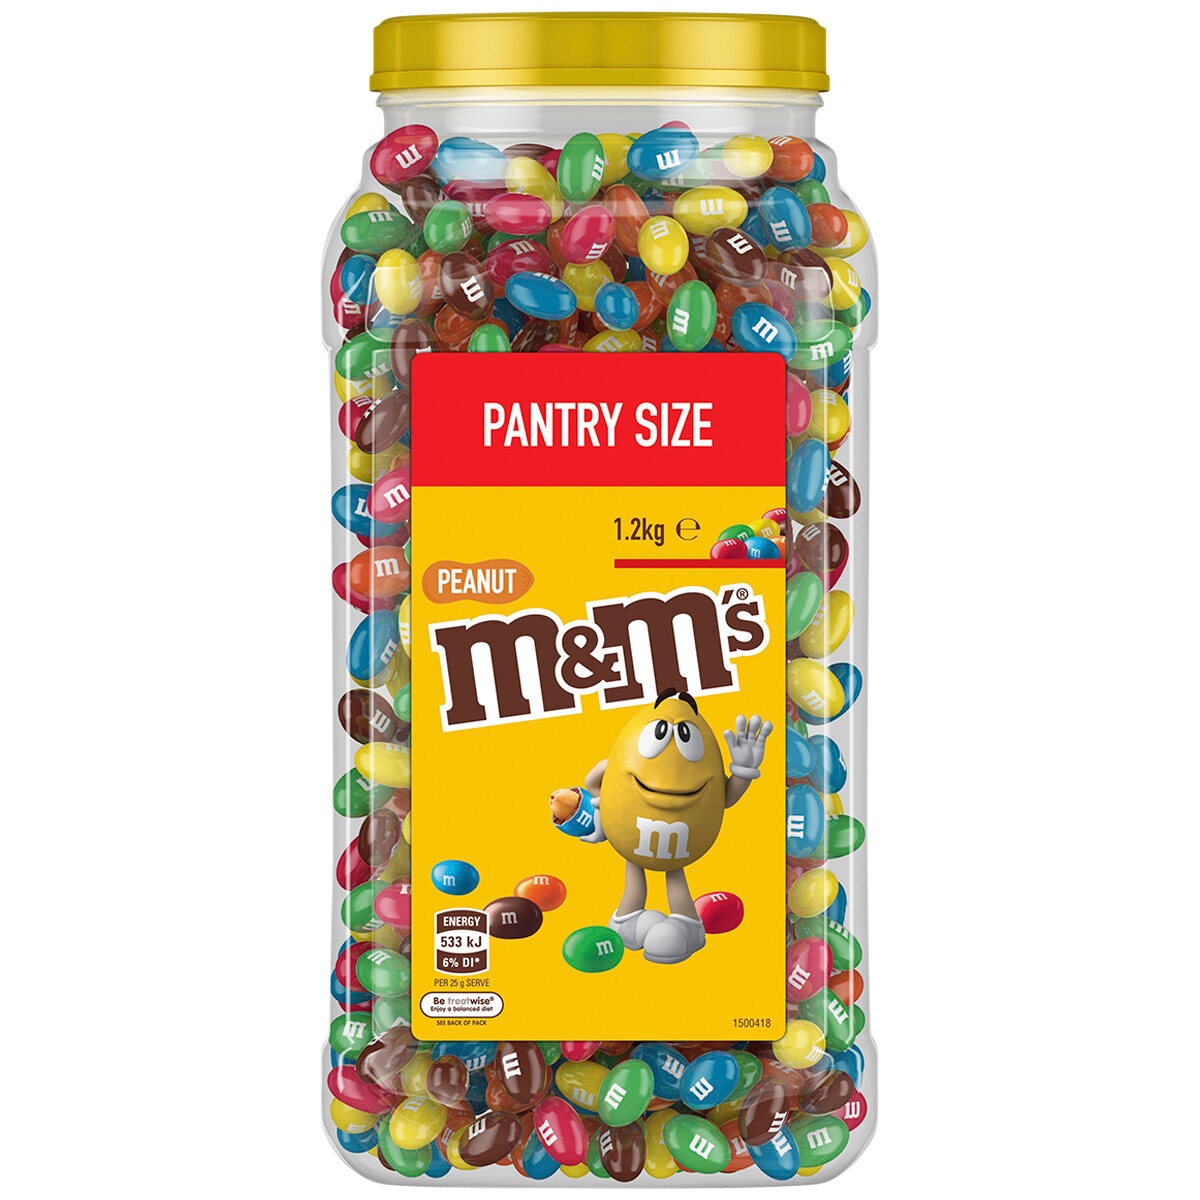 Peanut M&M's, 48 pk